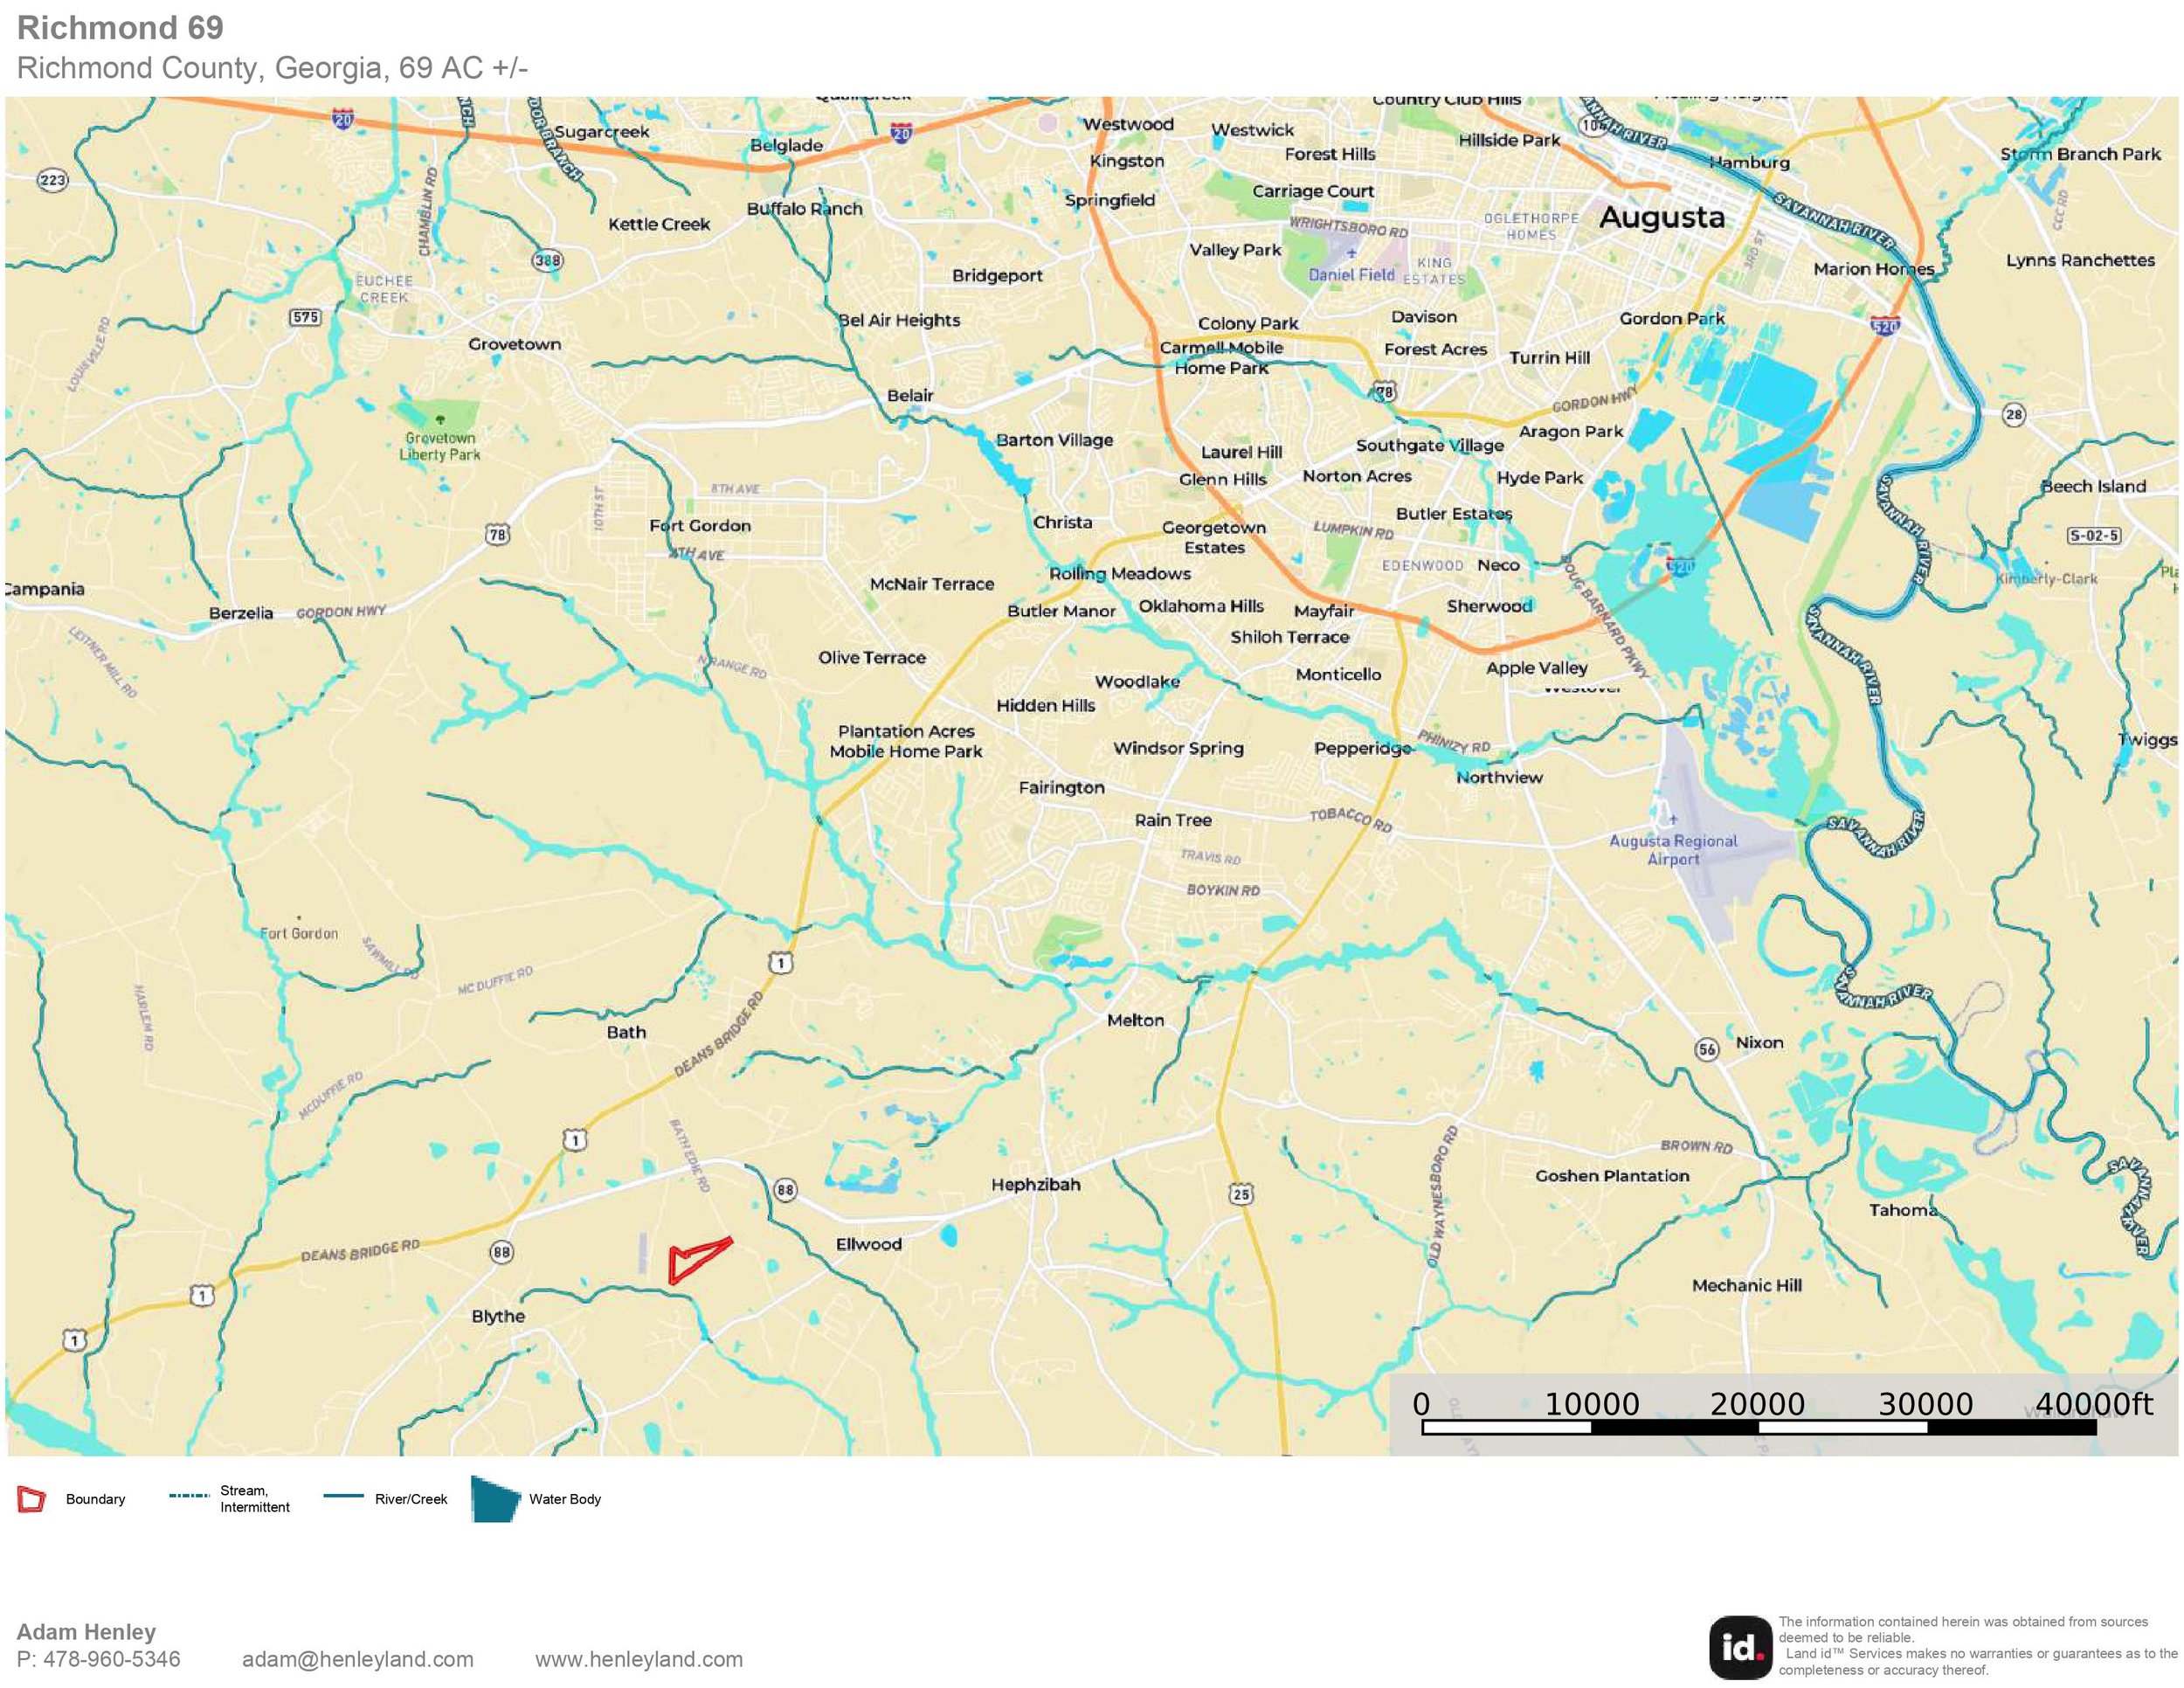 Richmond 69 - Location Map.jpg